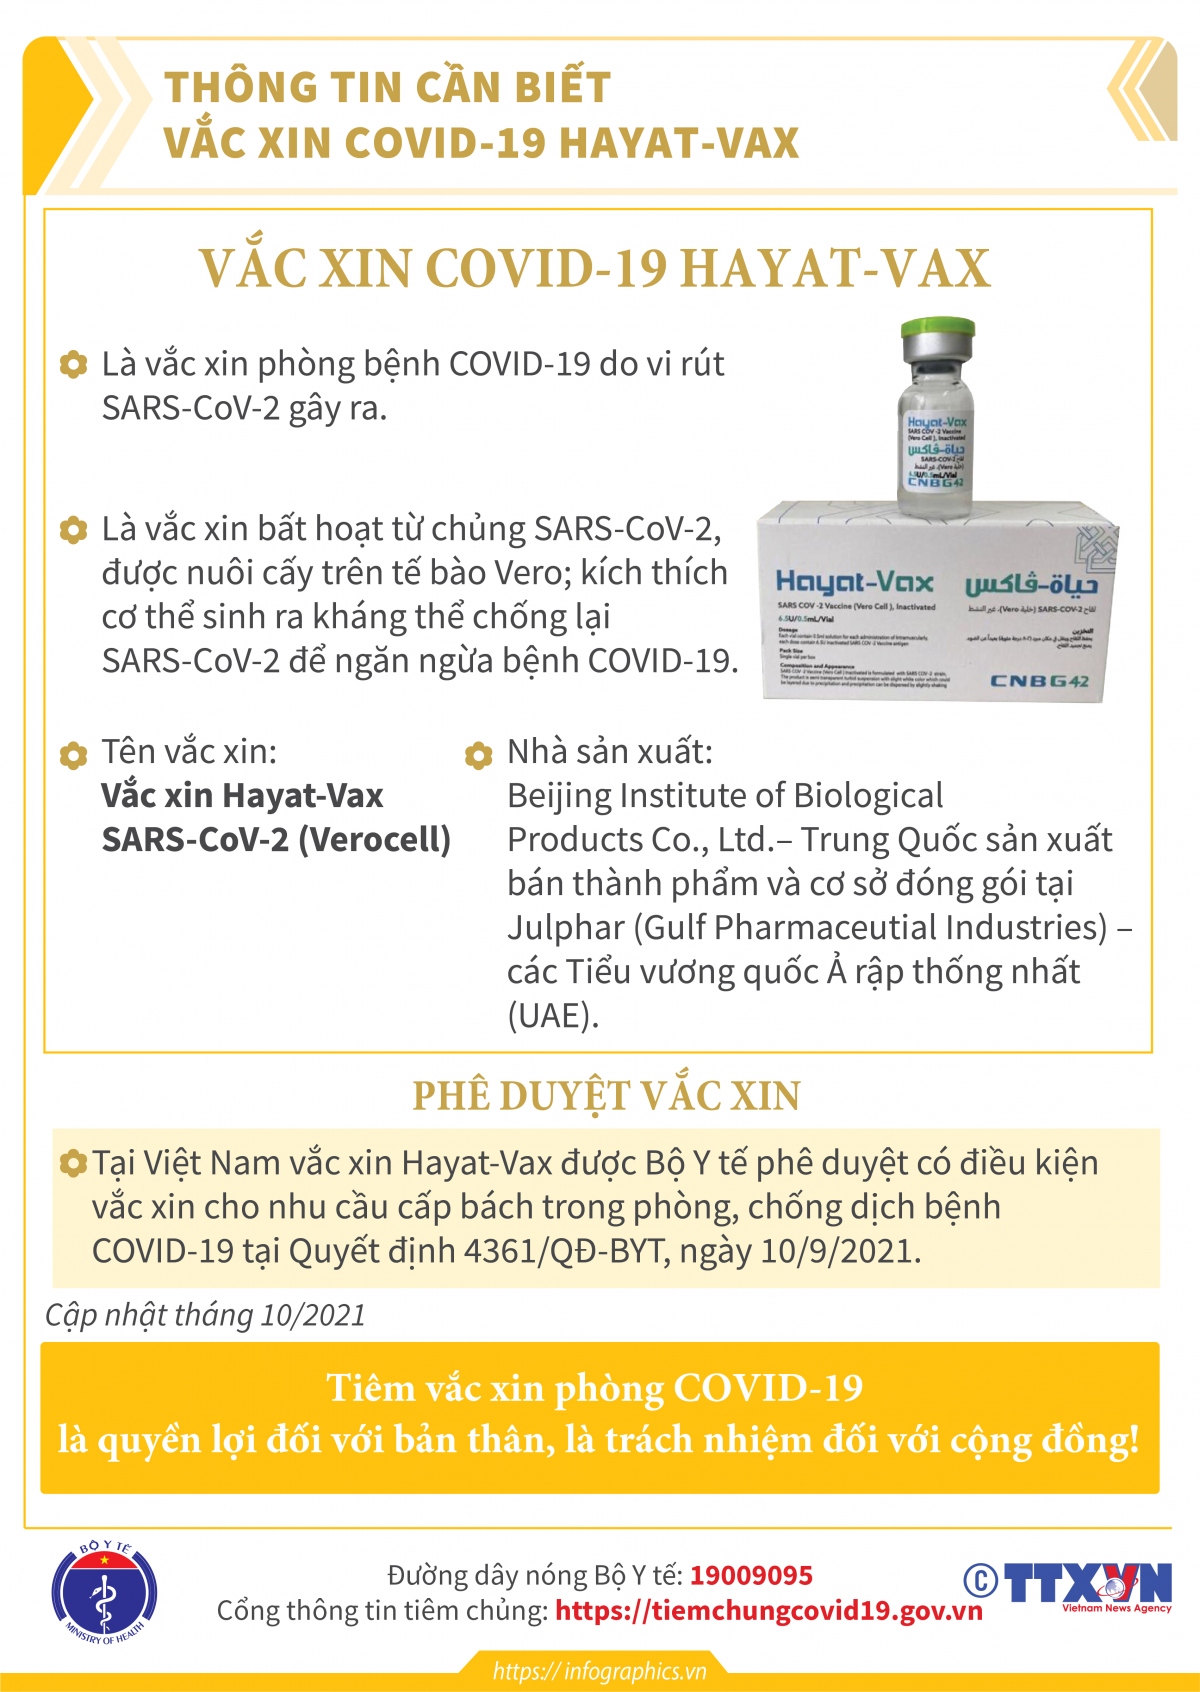 ban biet gi ve vaccine covid-19 hayat-vax hinh anh 1